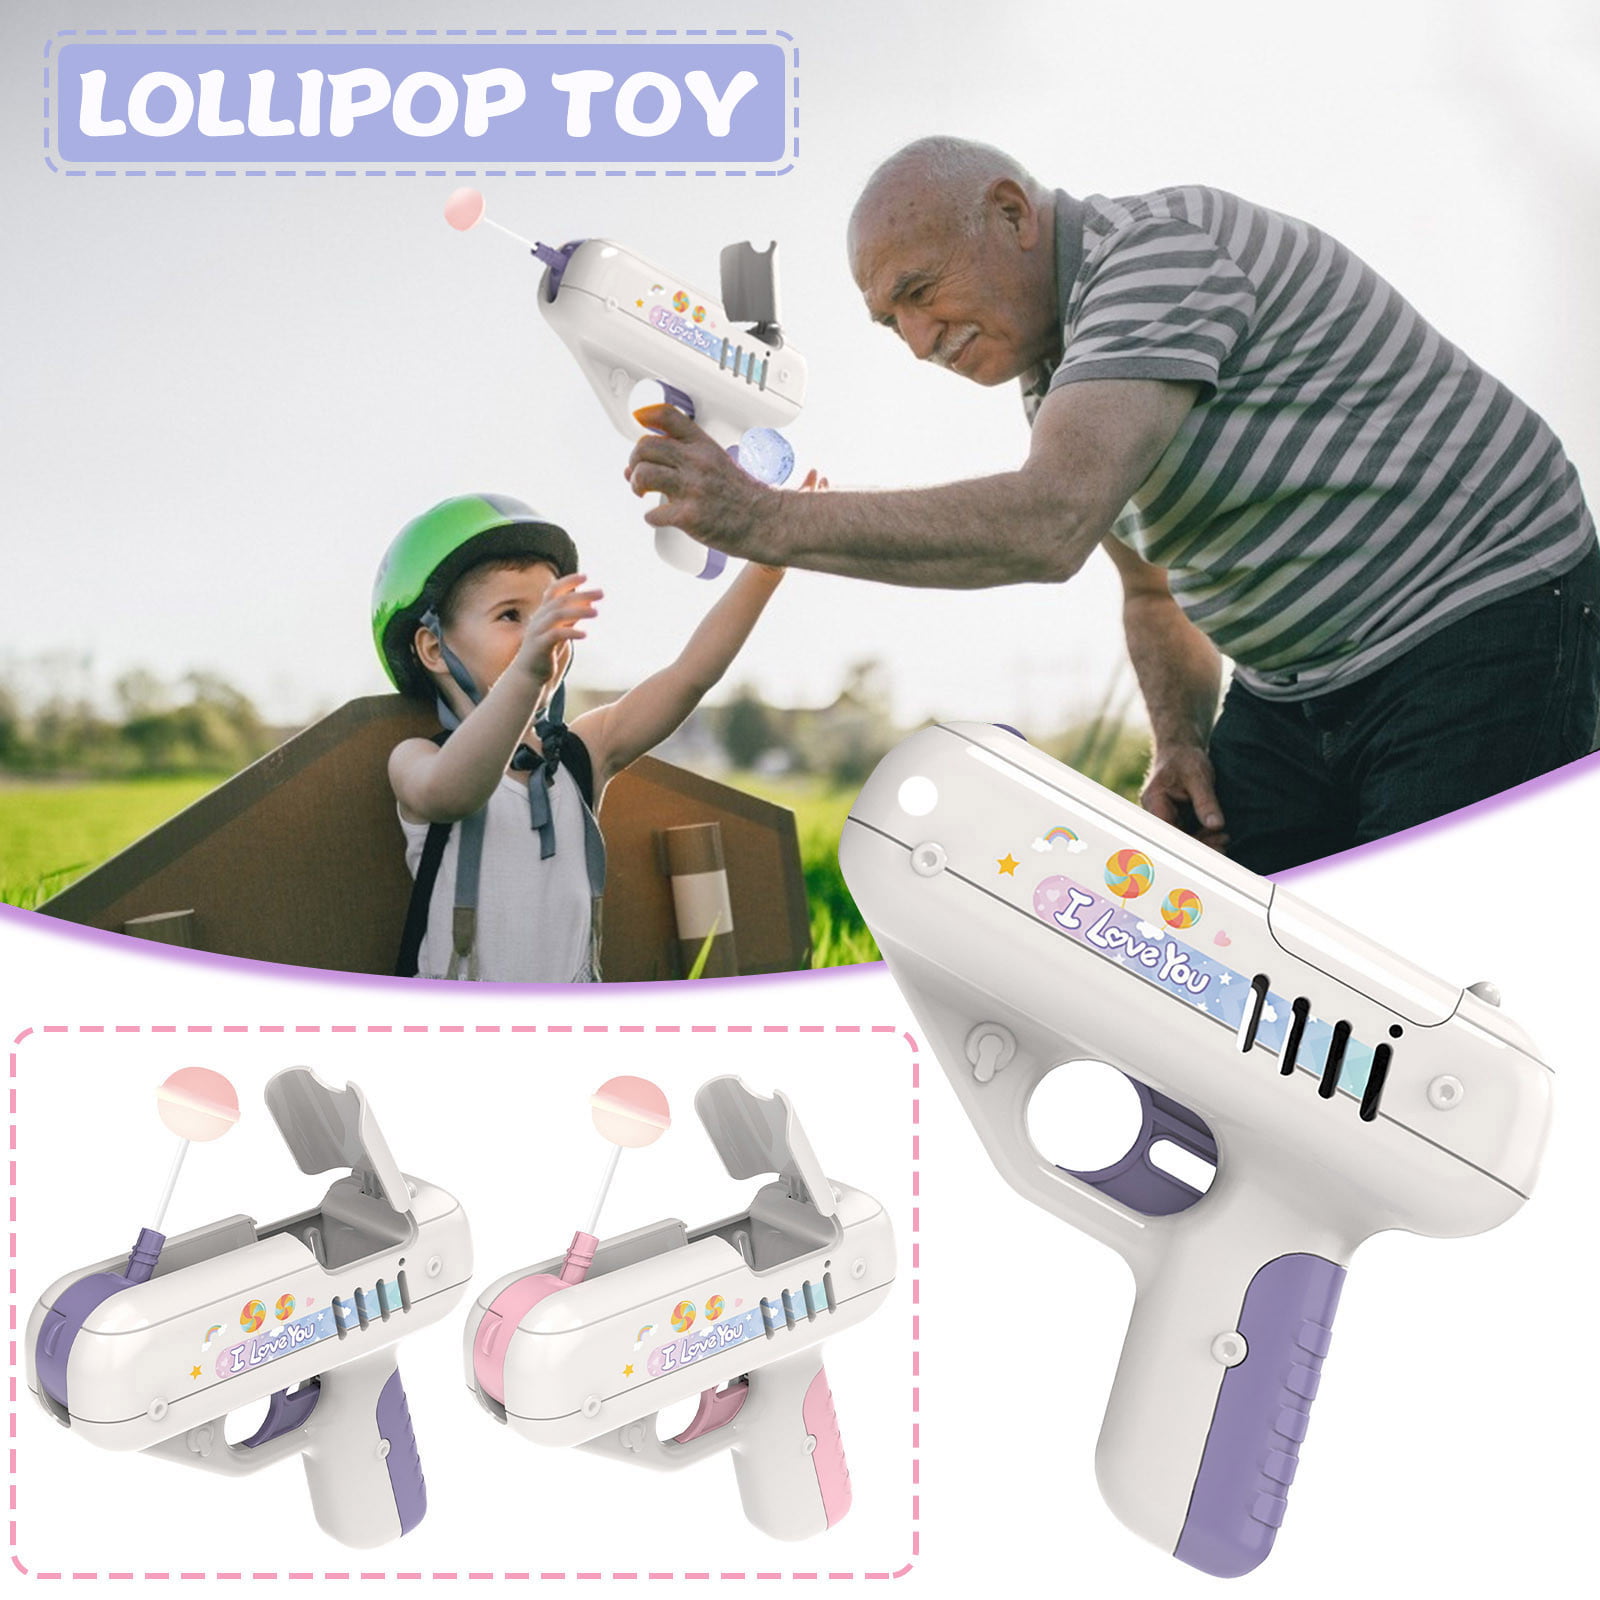 Details about   Lollipop Gun Children's Candy Gun Toy Surprise Creative Girl Gift Boy D8G5 show original title 